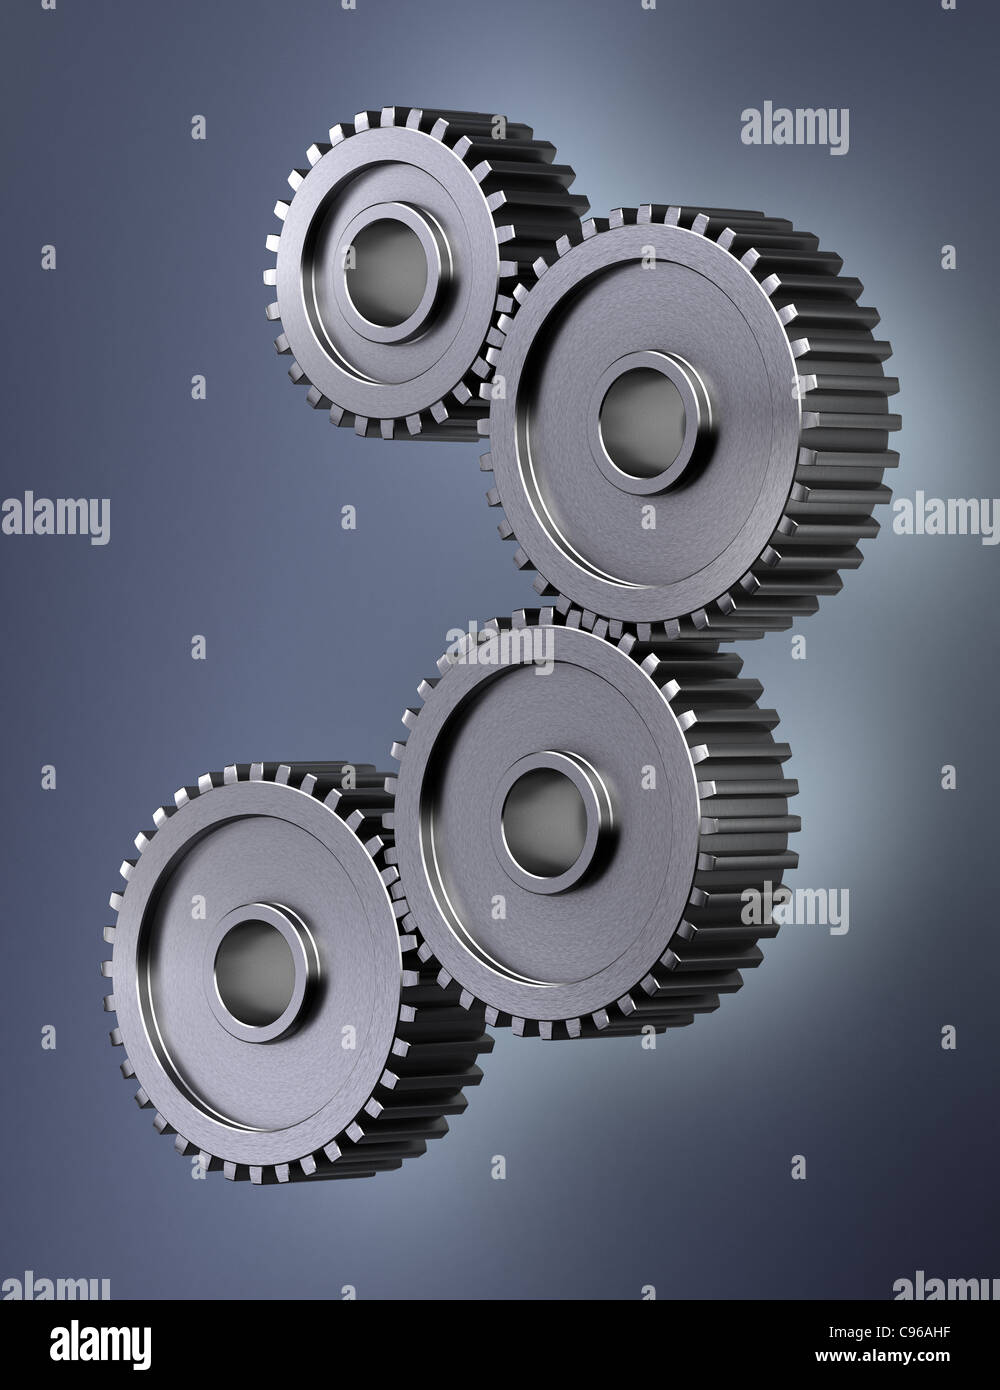 Four gear wheels symbolizing perfect teamwork Stock Photo